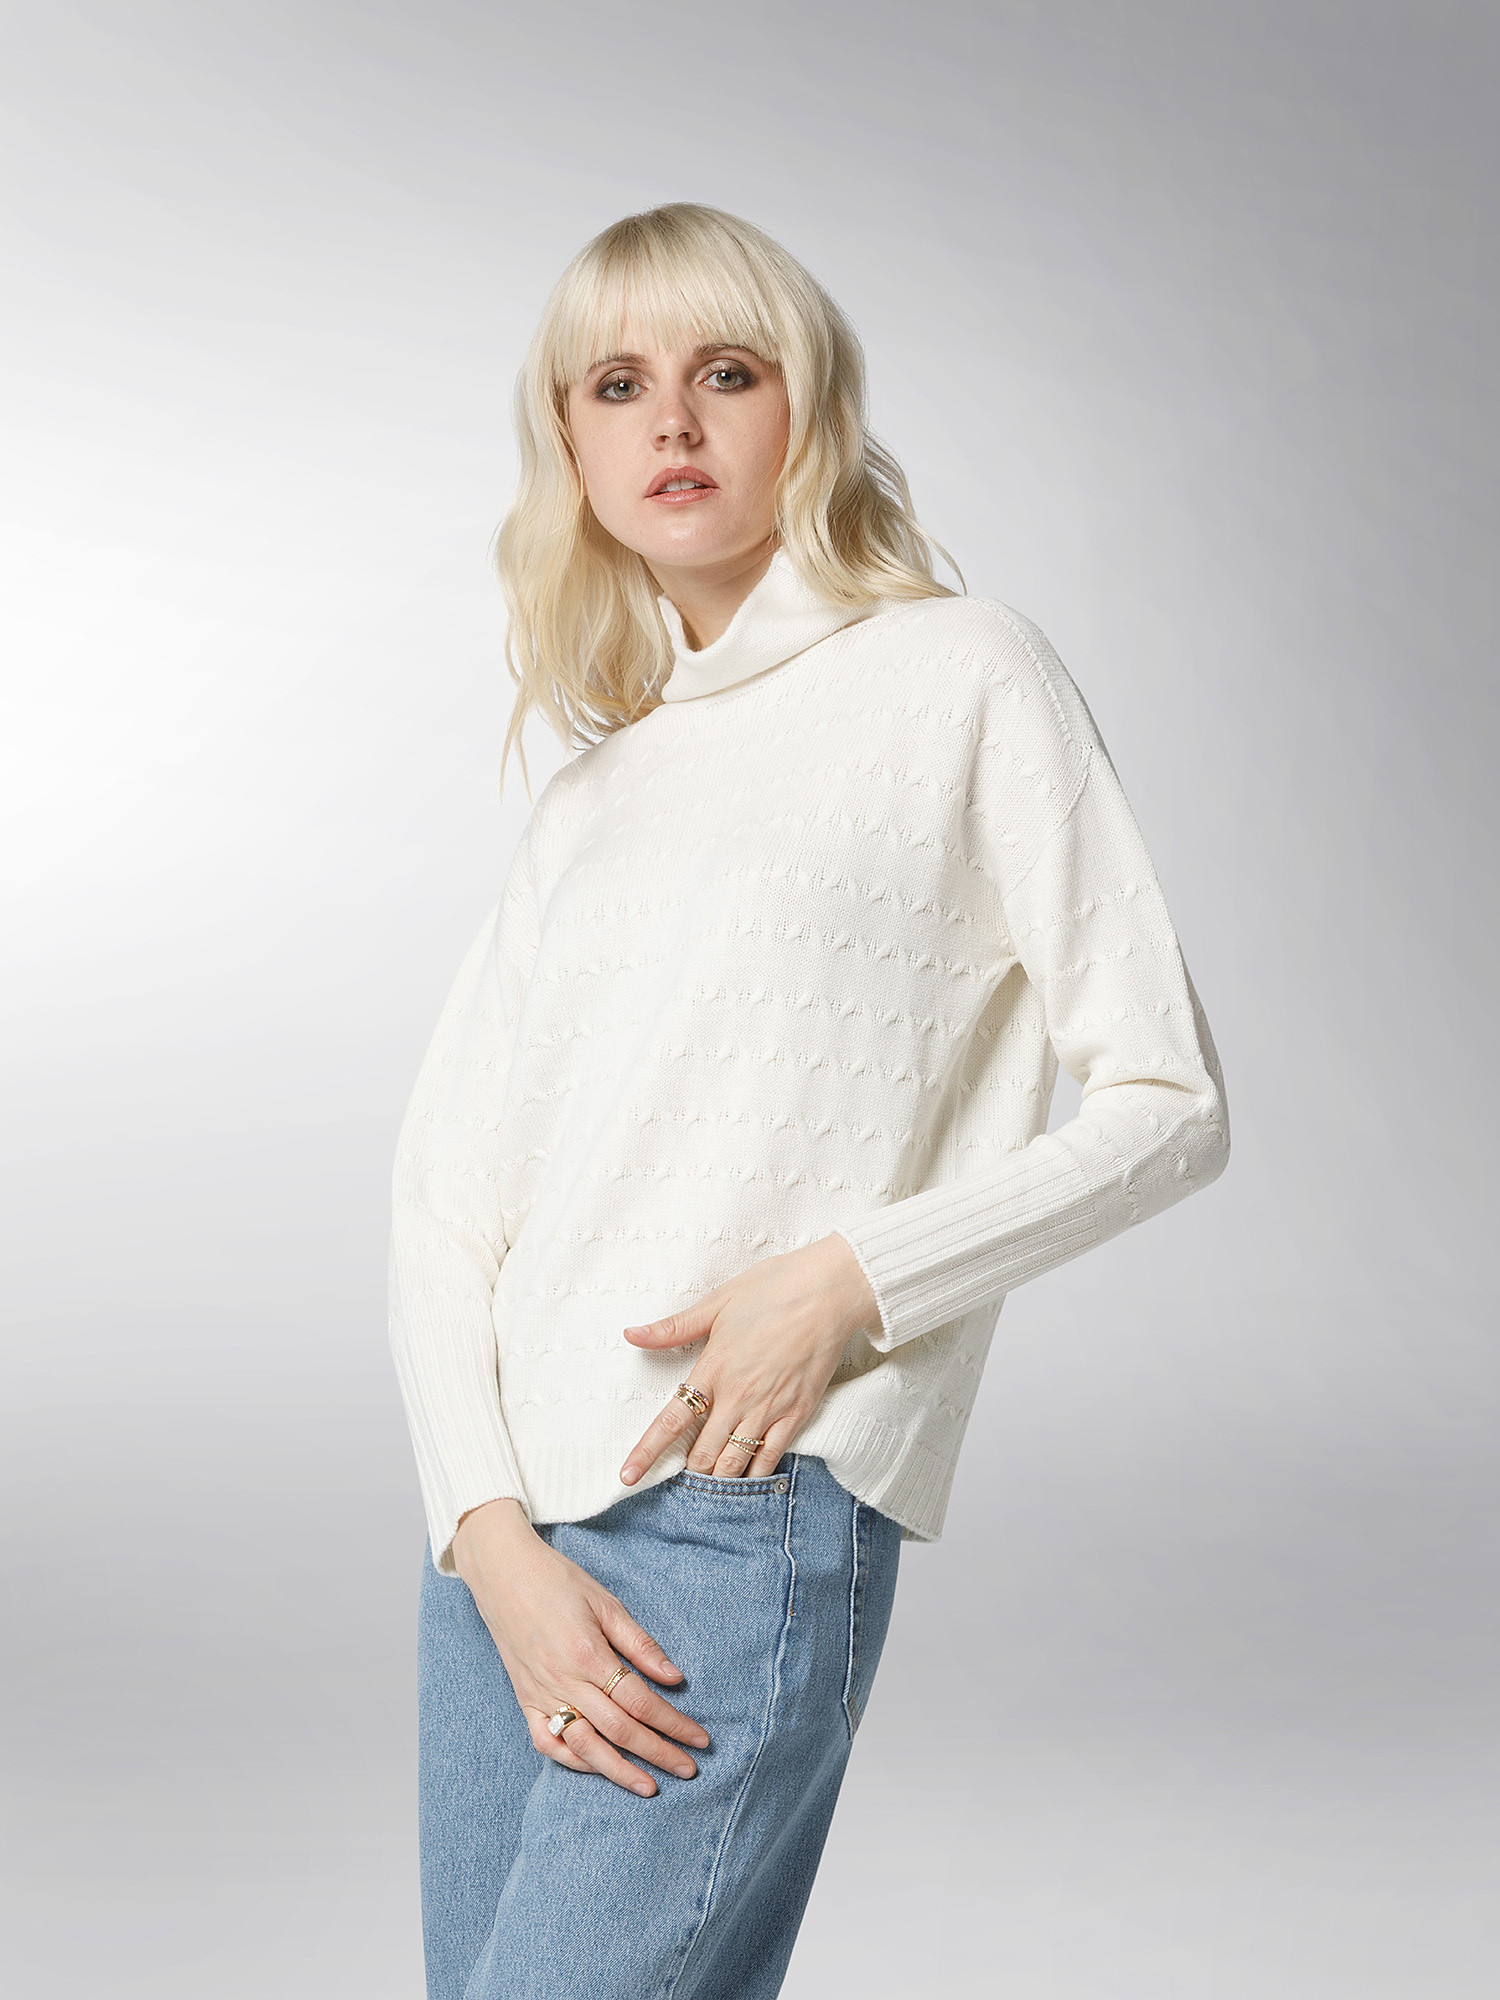 K Collection - Knitted turtleneck pullover, Ecru, large image number 3